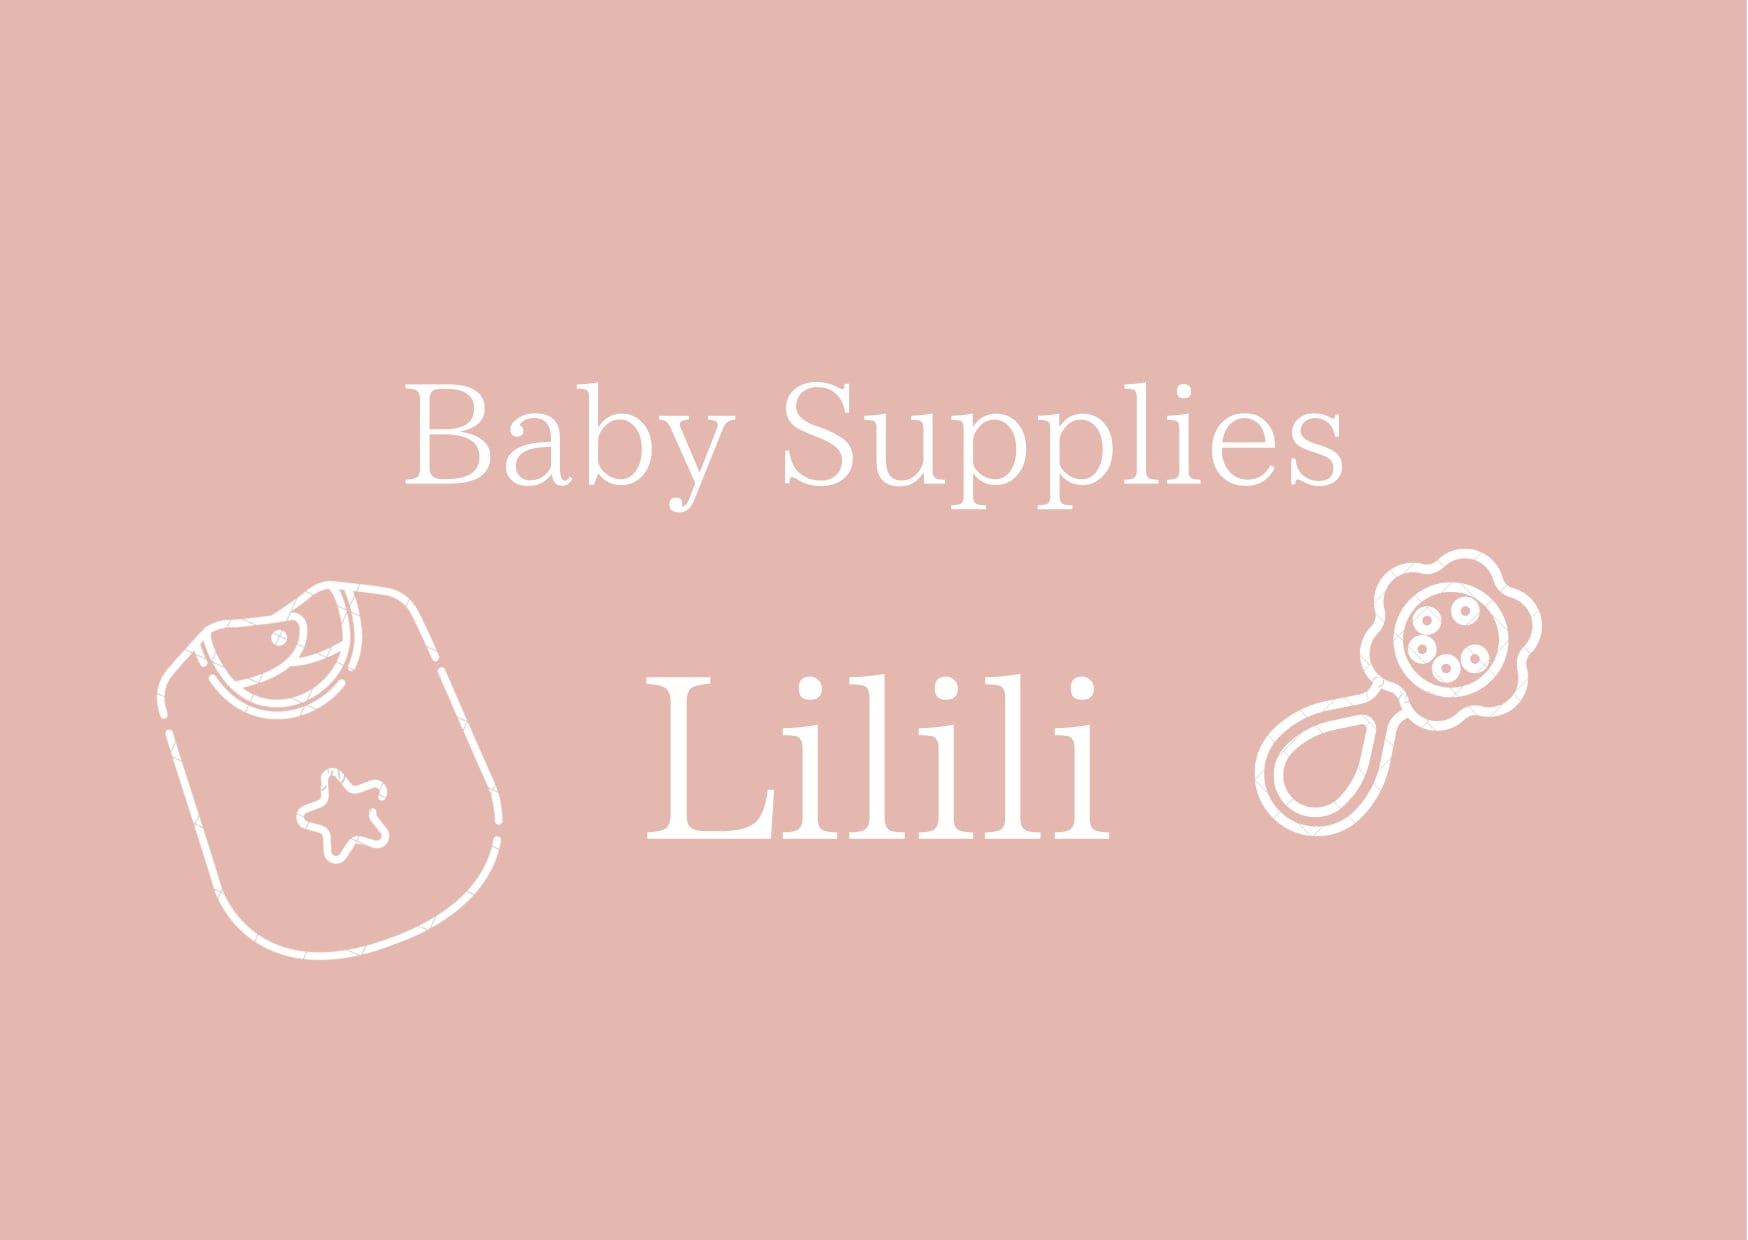 Baby Supplies Lilili